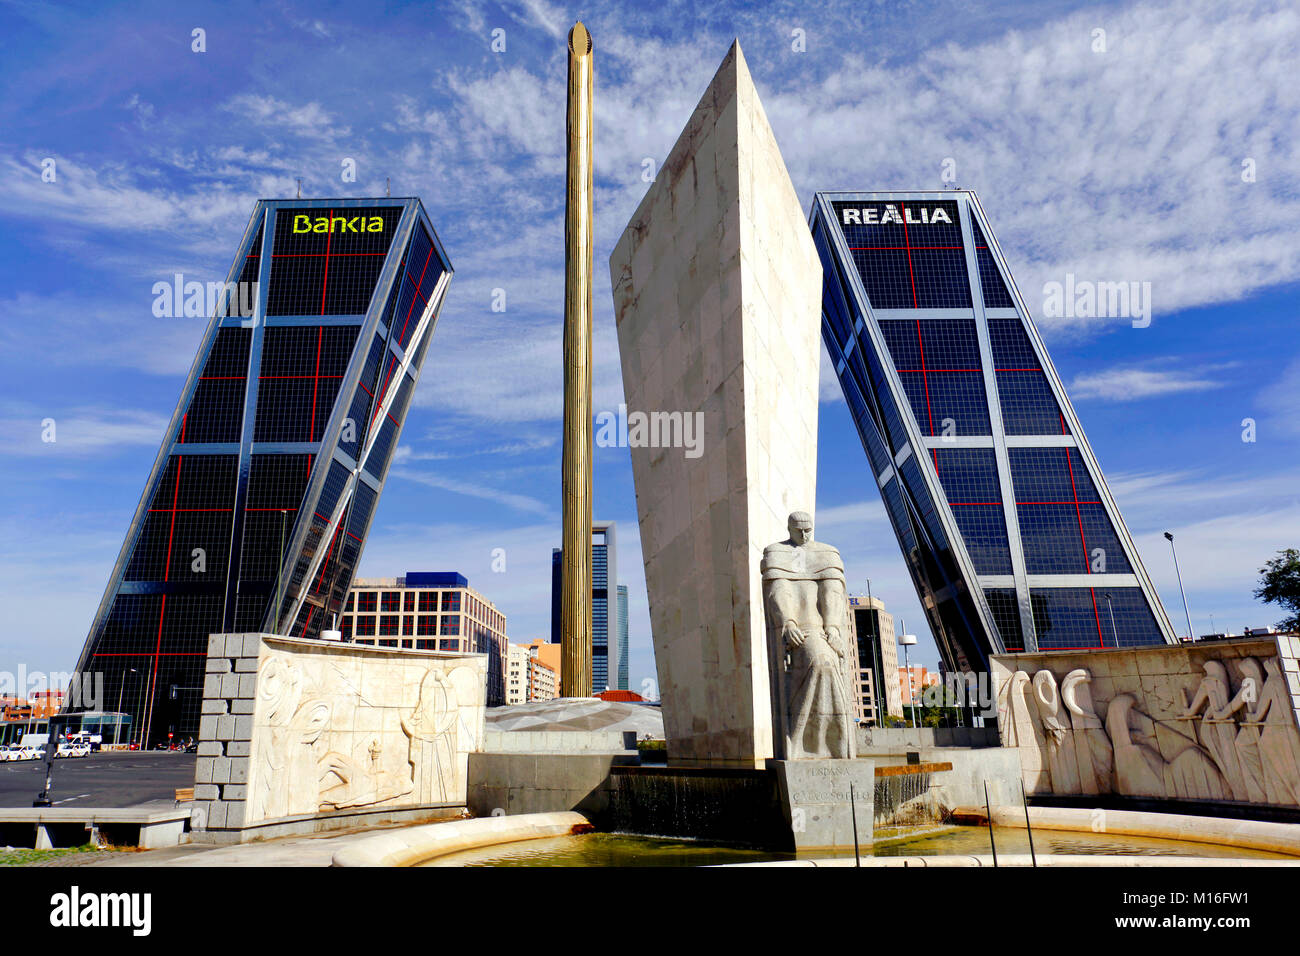 Monument to Calvo Sotelo in front of the KIO Towers, Plaza de Castilla Square, Madrid, Spain Stock Photo